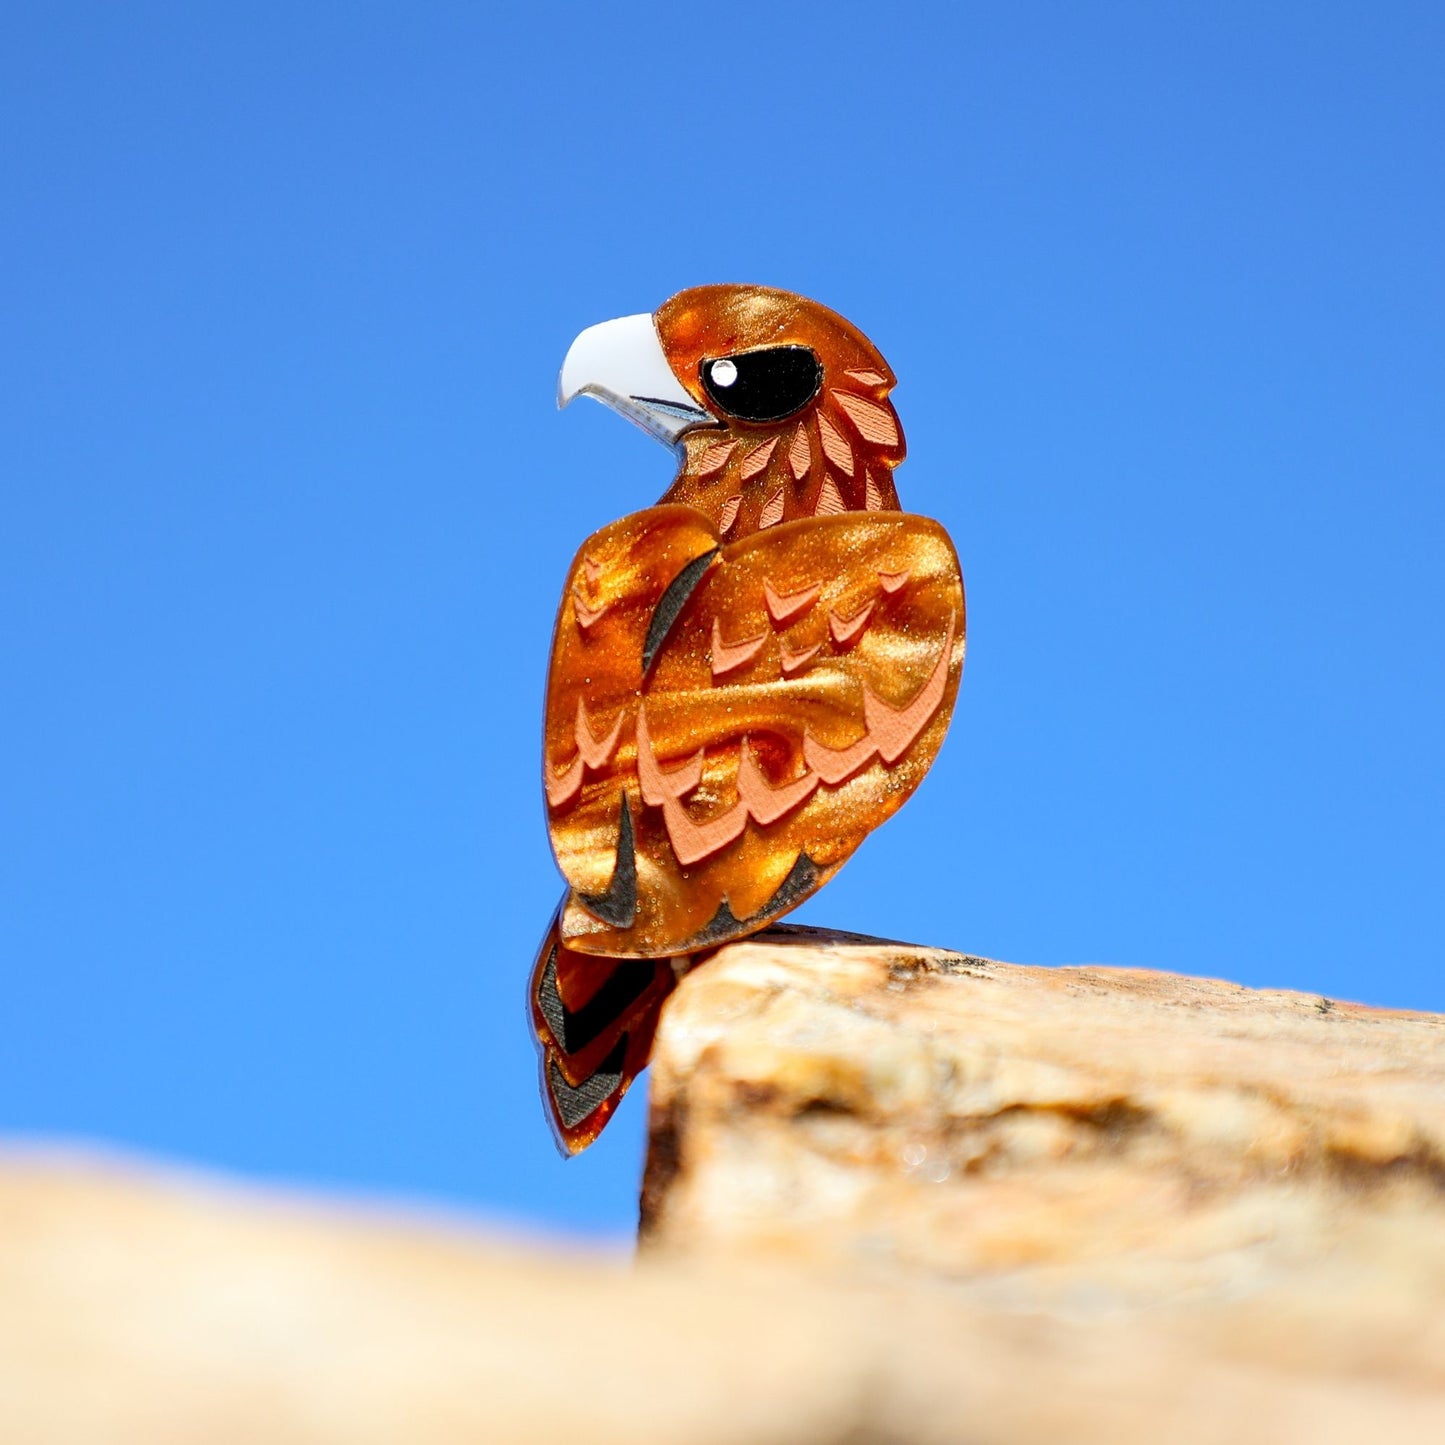 BINKABU Wedge-Tailed Eagle Studs handmade acrylic bird earrings